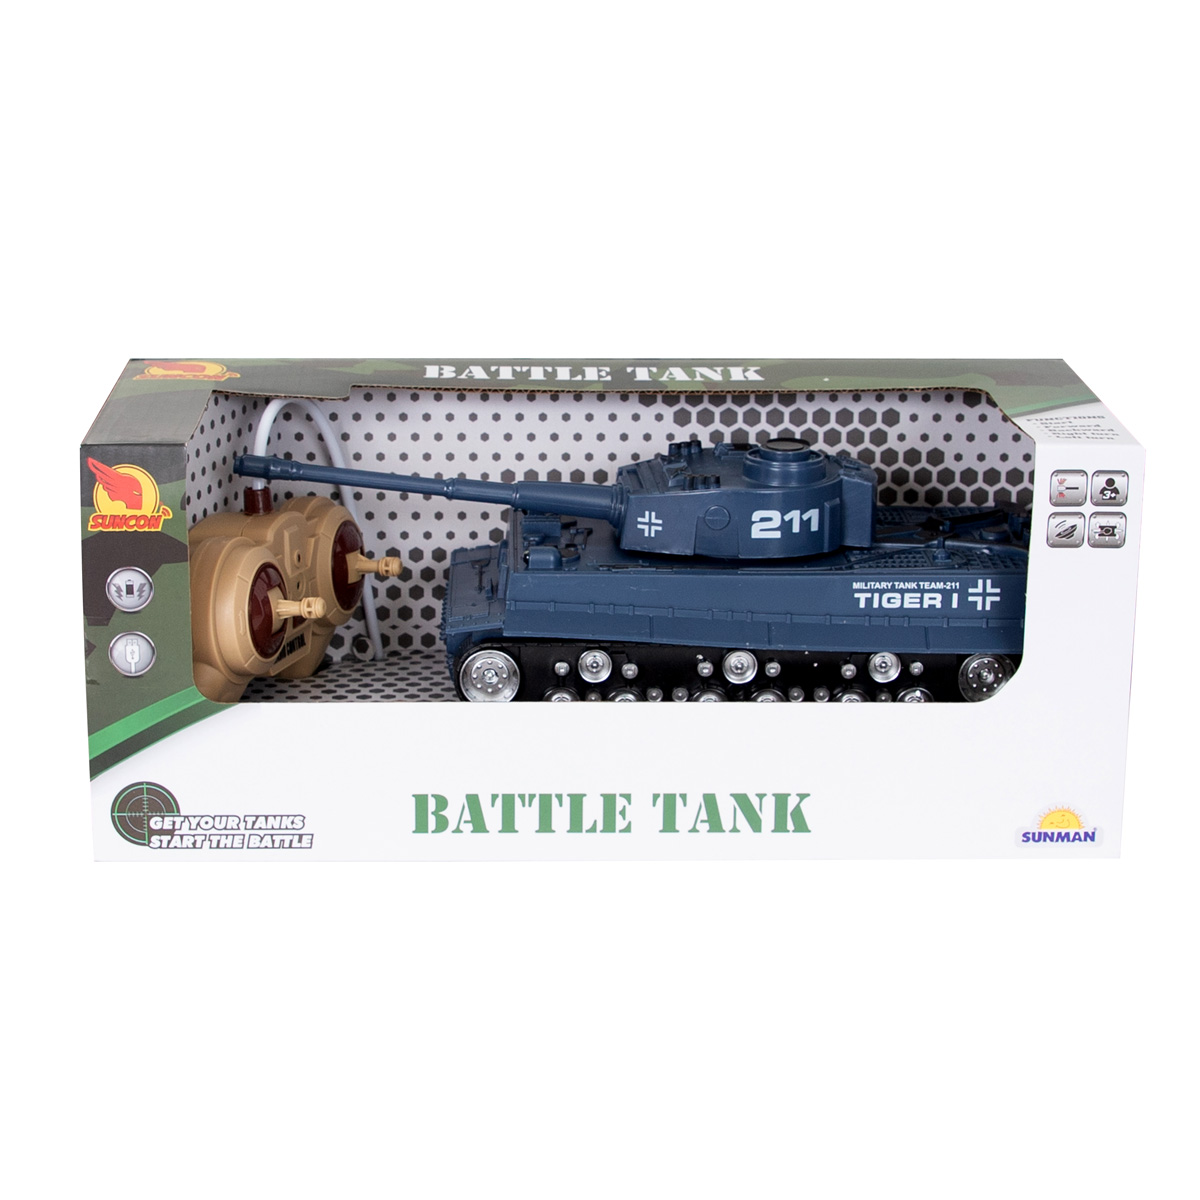 Tanc cu lumini si sunete, Suncon Battle Tank, 1:32